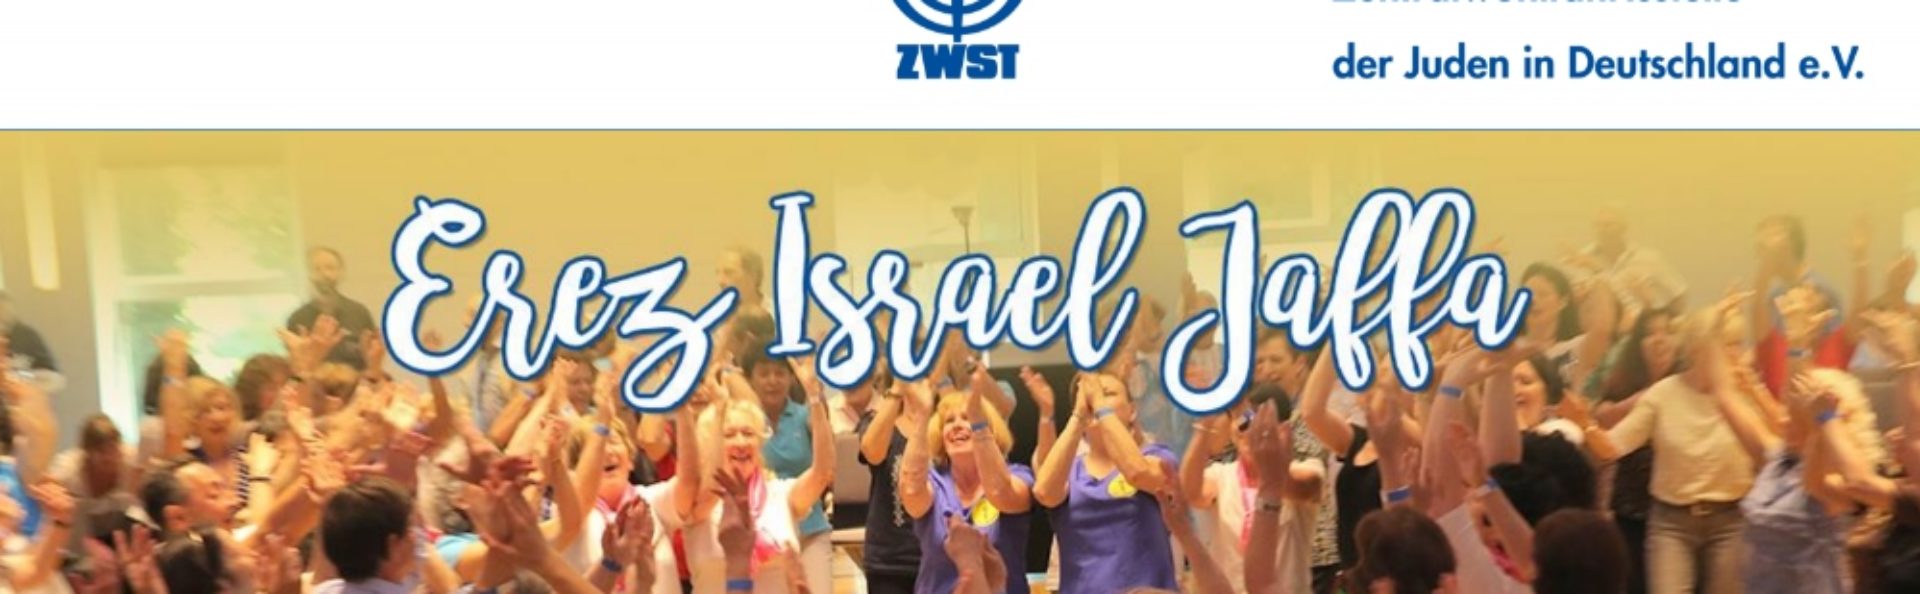 Tanzfestival „Erez Israel Jaffa“ am 23.06.2019 in Frankfurt am Main